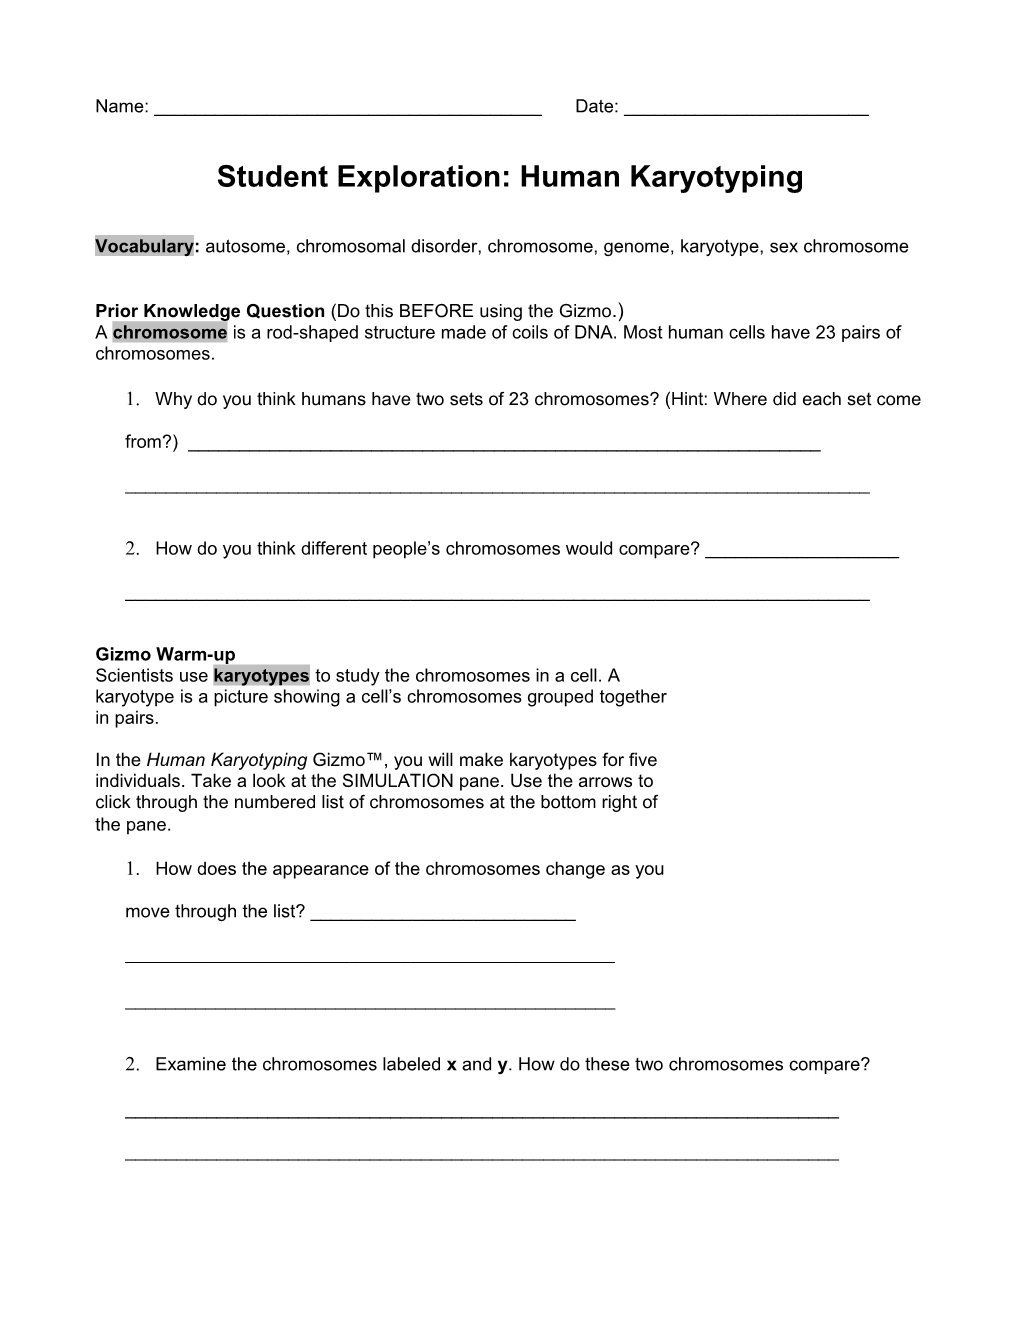 Student Exploration: Human Karyotyping